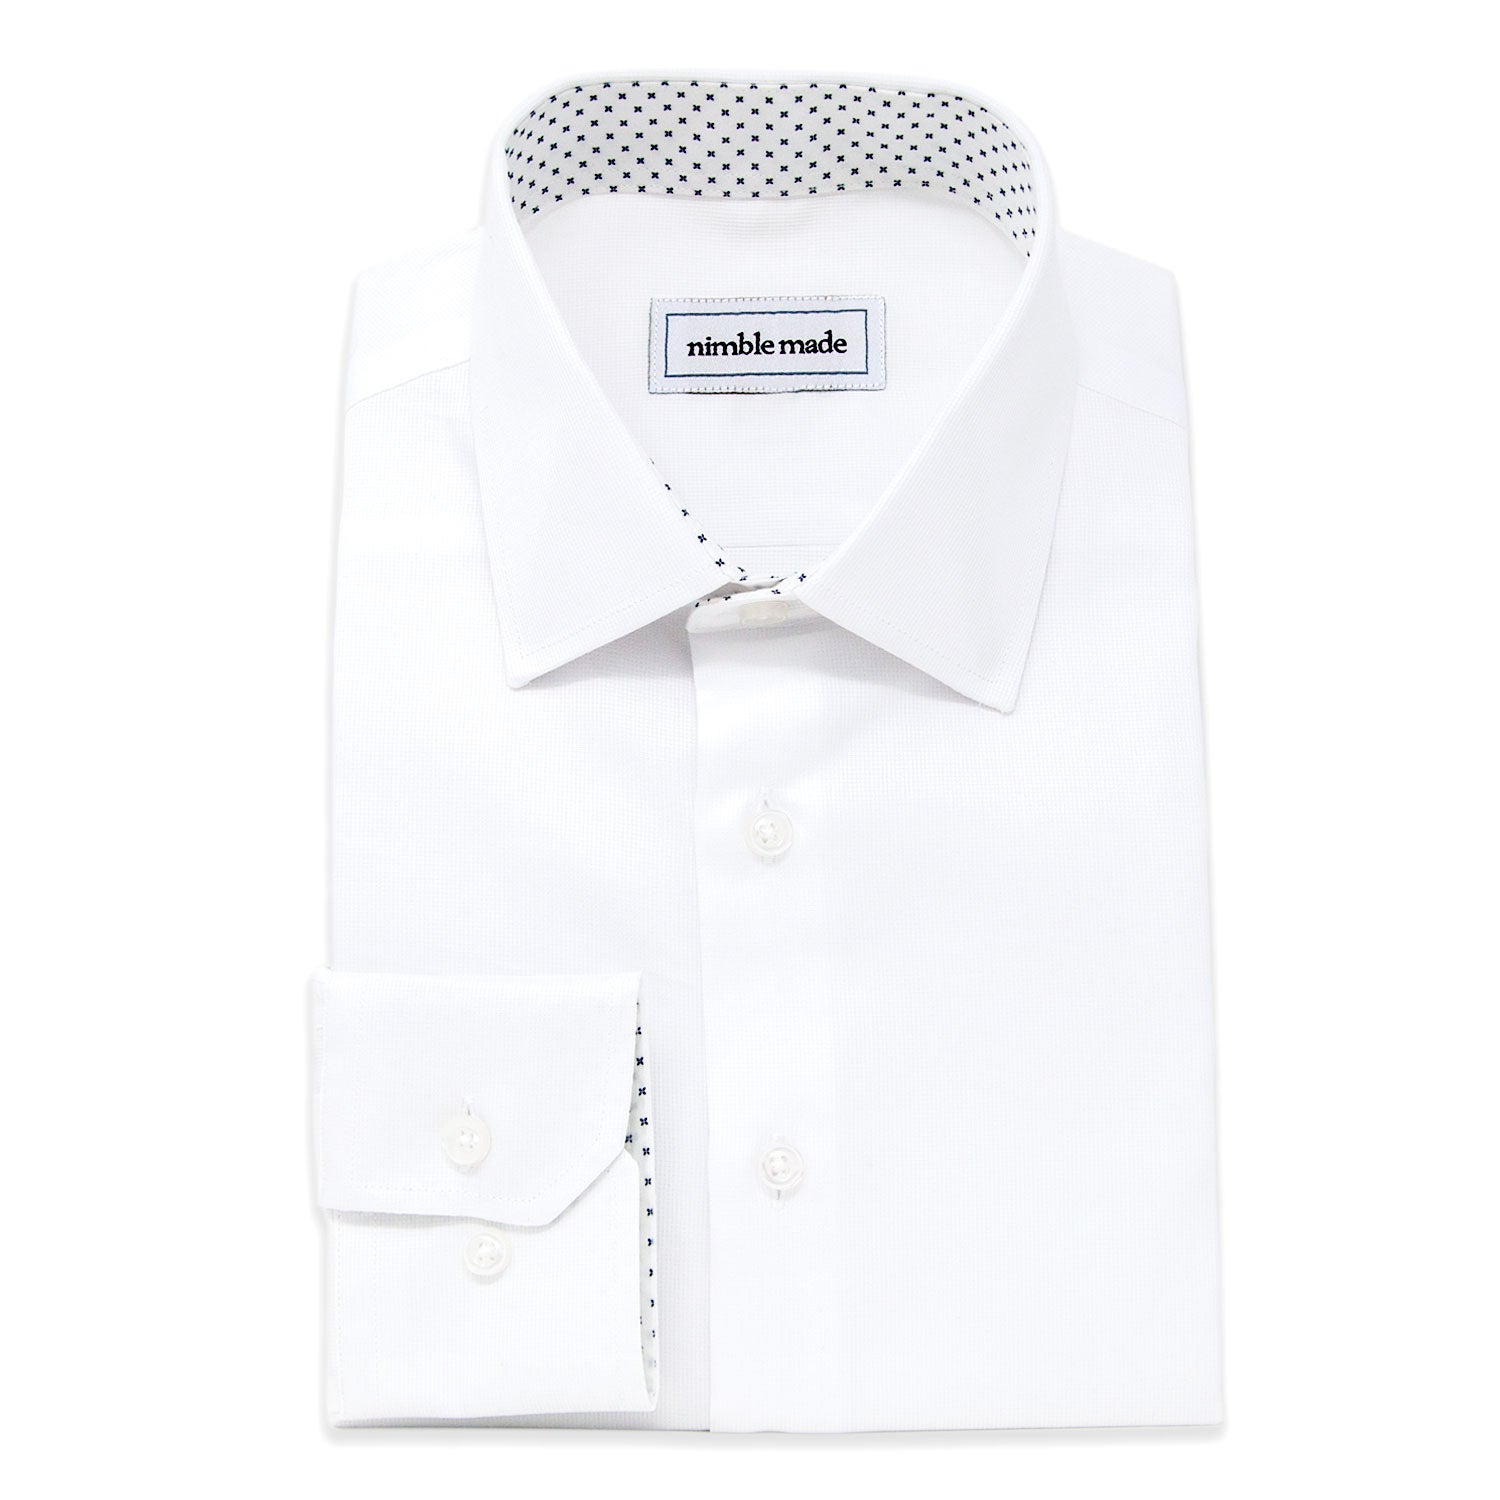 White Solid Dress Shirt, Men's Dress Shirts